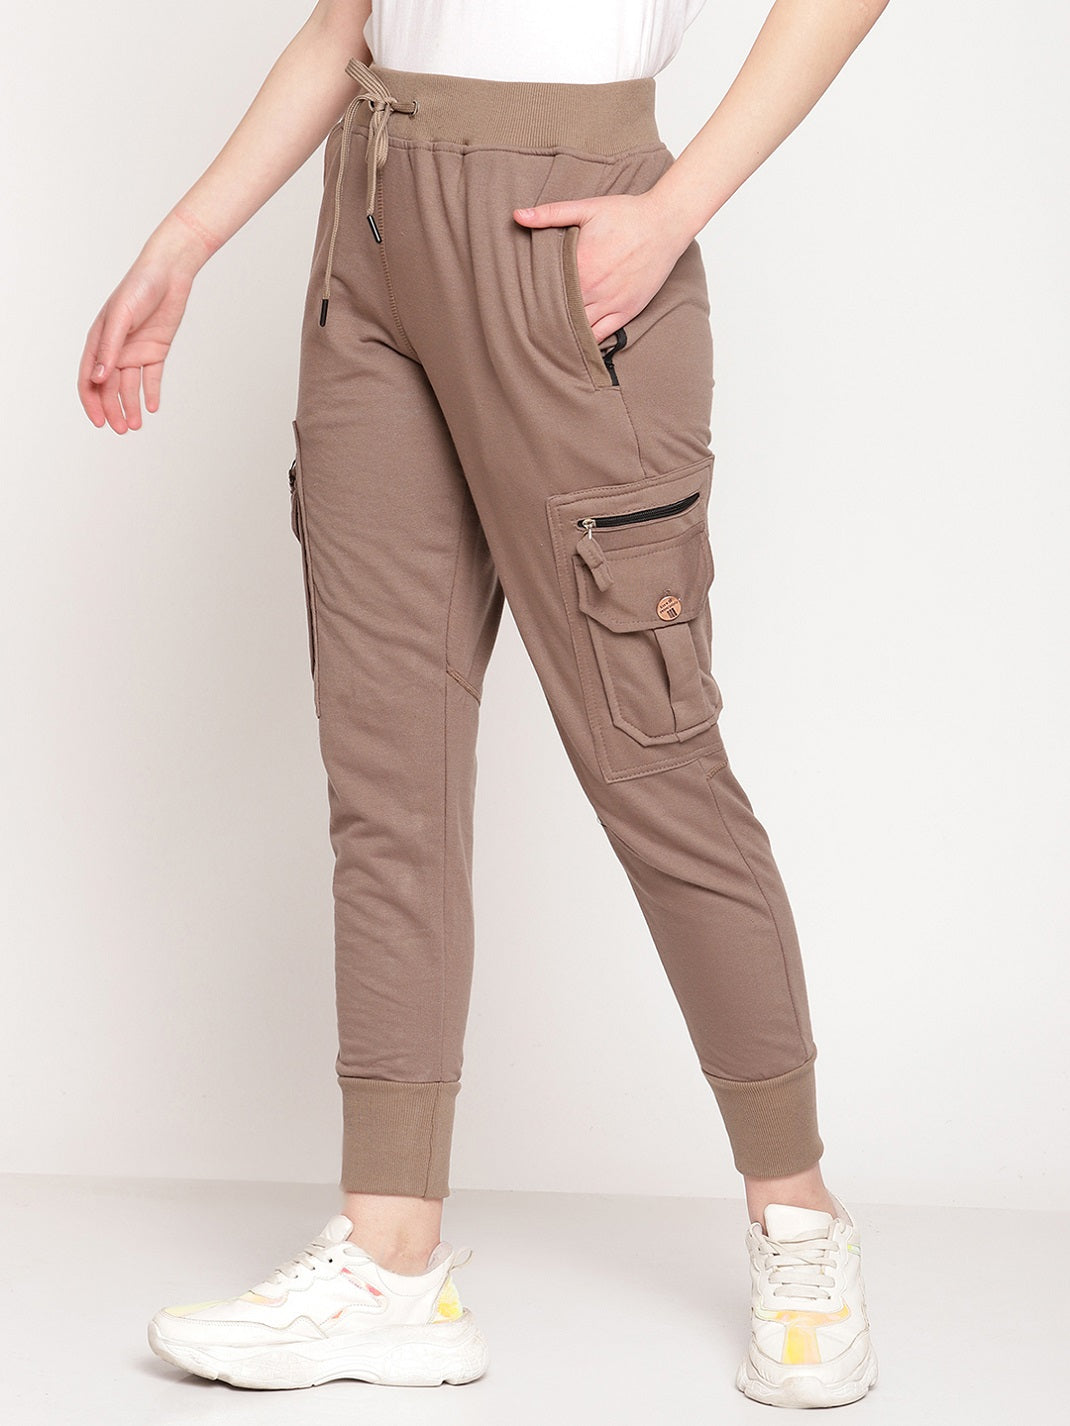 Alternative 31082F - Ladies' Eco-Fleece Jogger $25.17 - Women's Pants